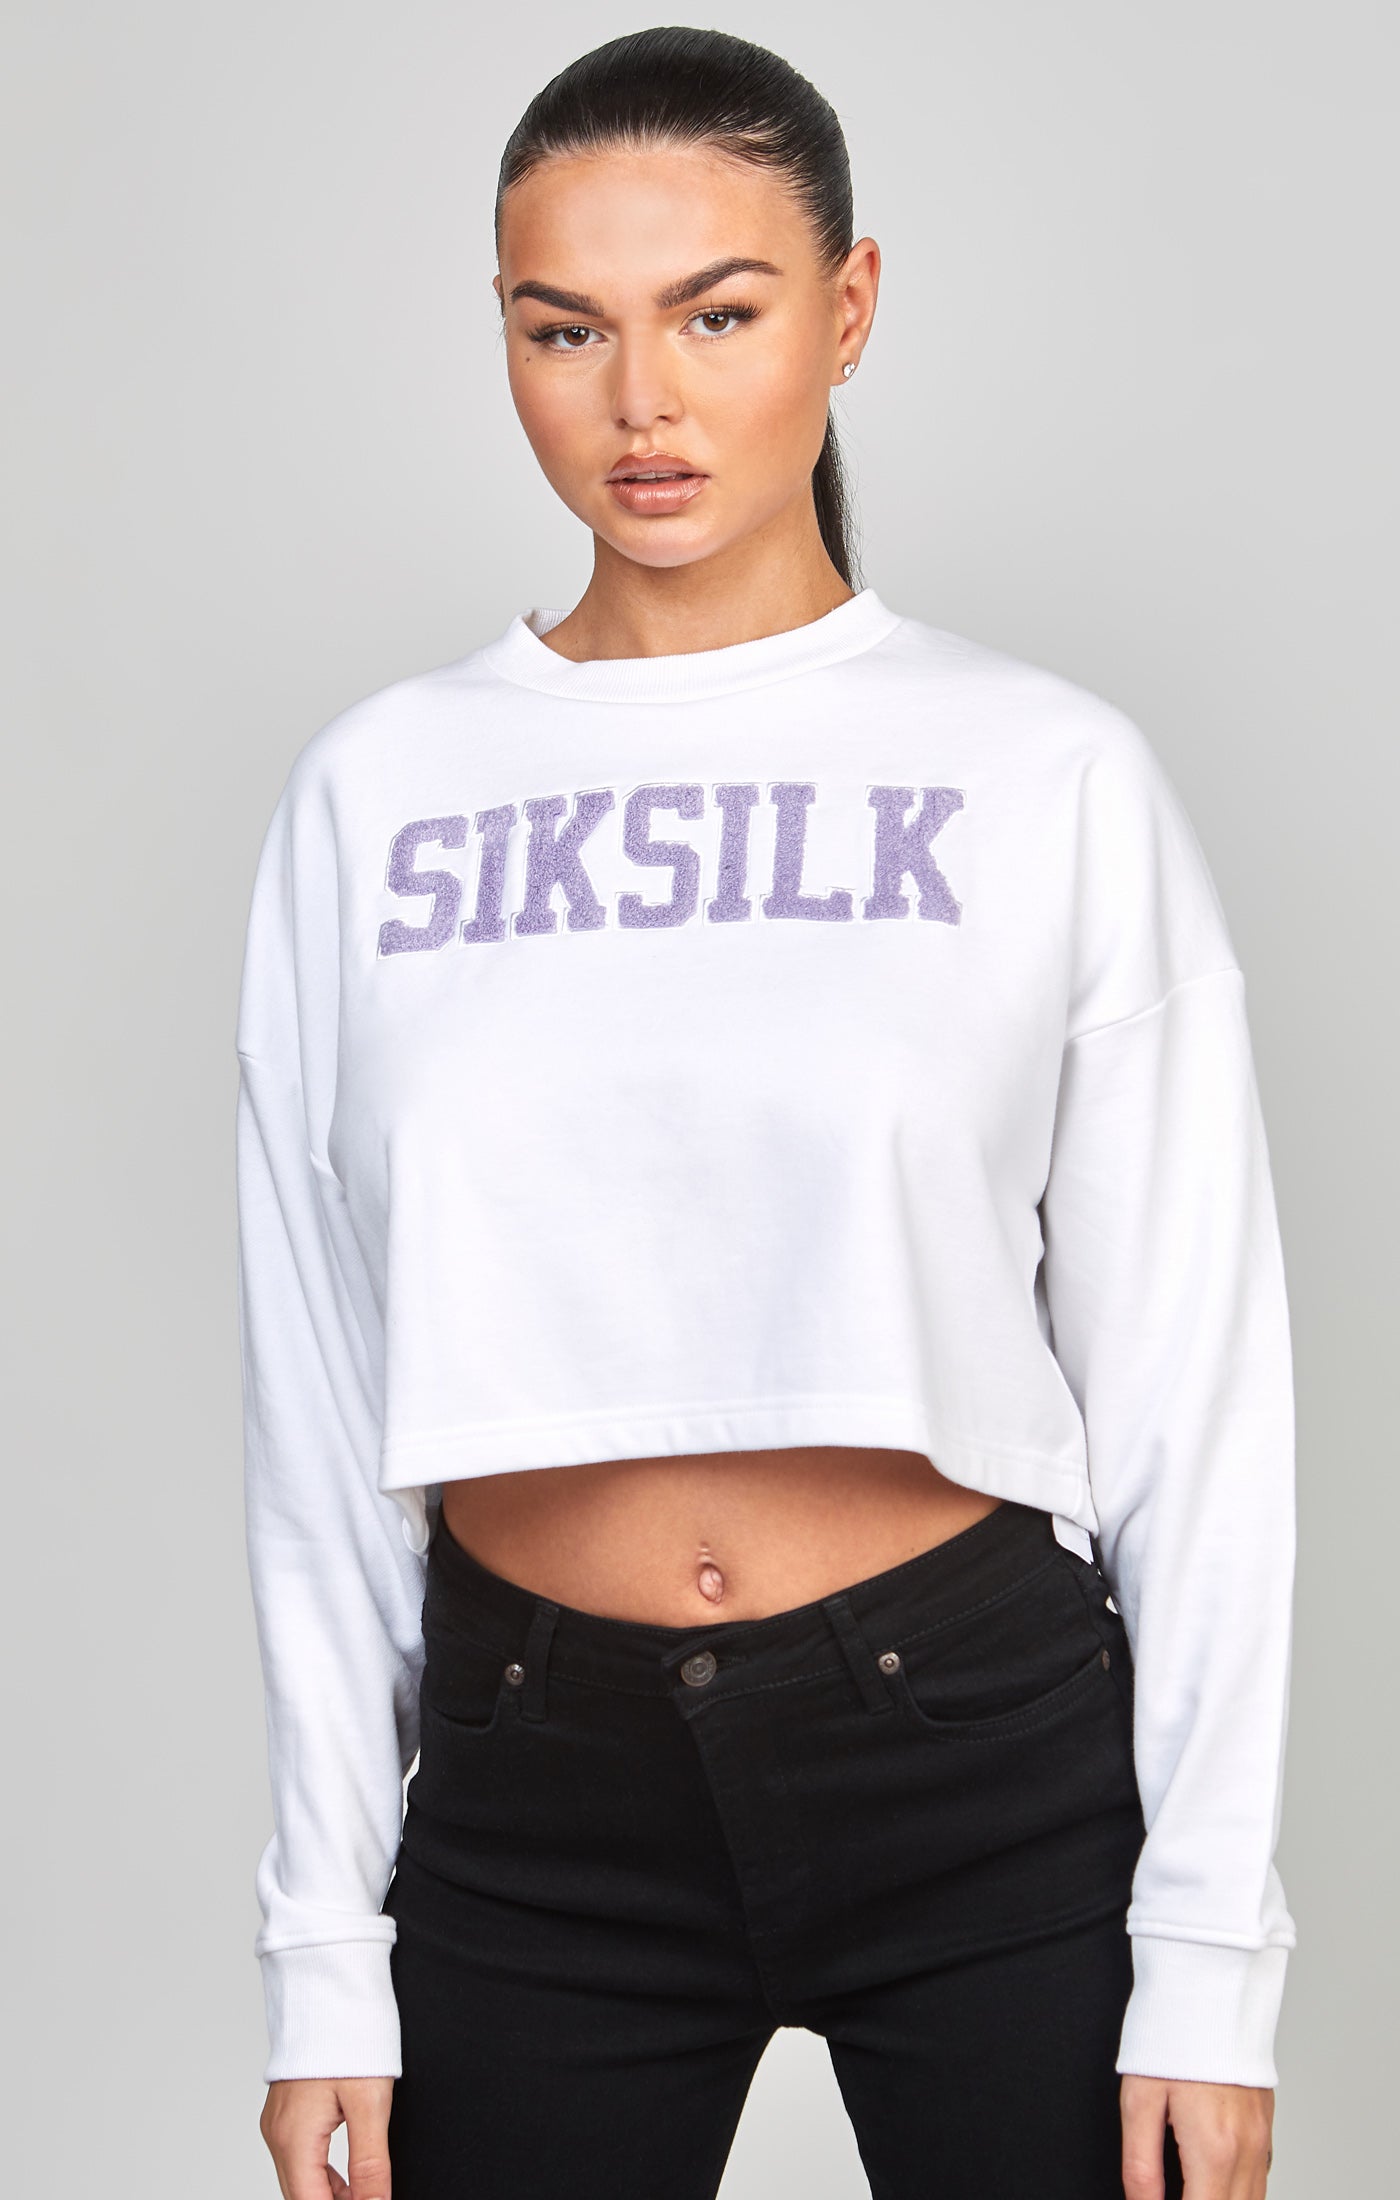 A Modern and Individual fashion brand online. | SikSilk UK